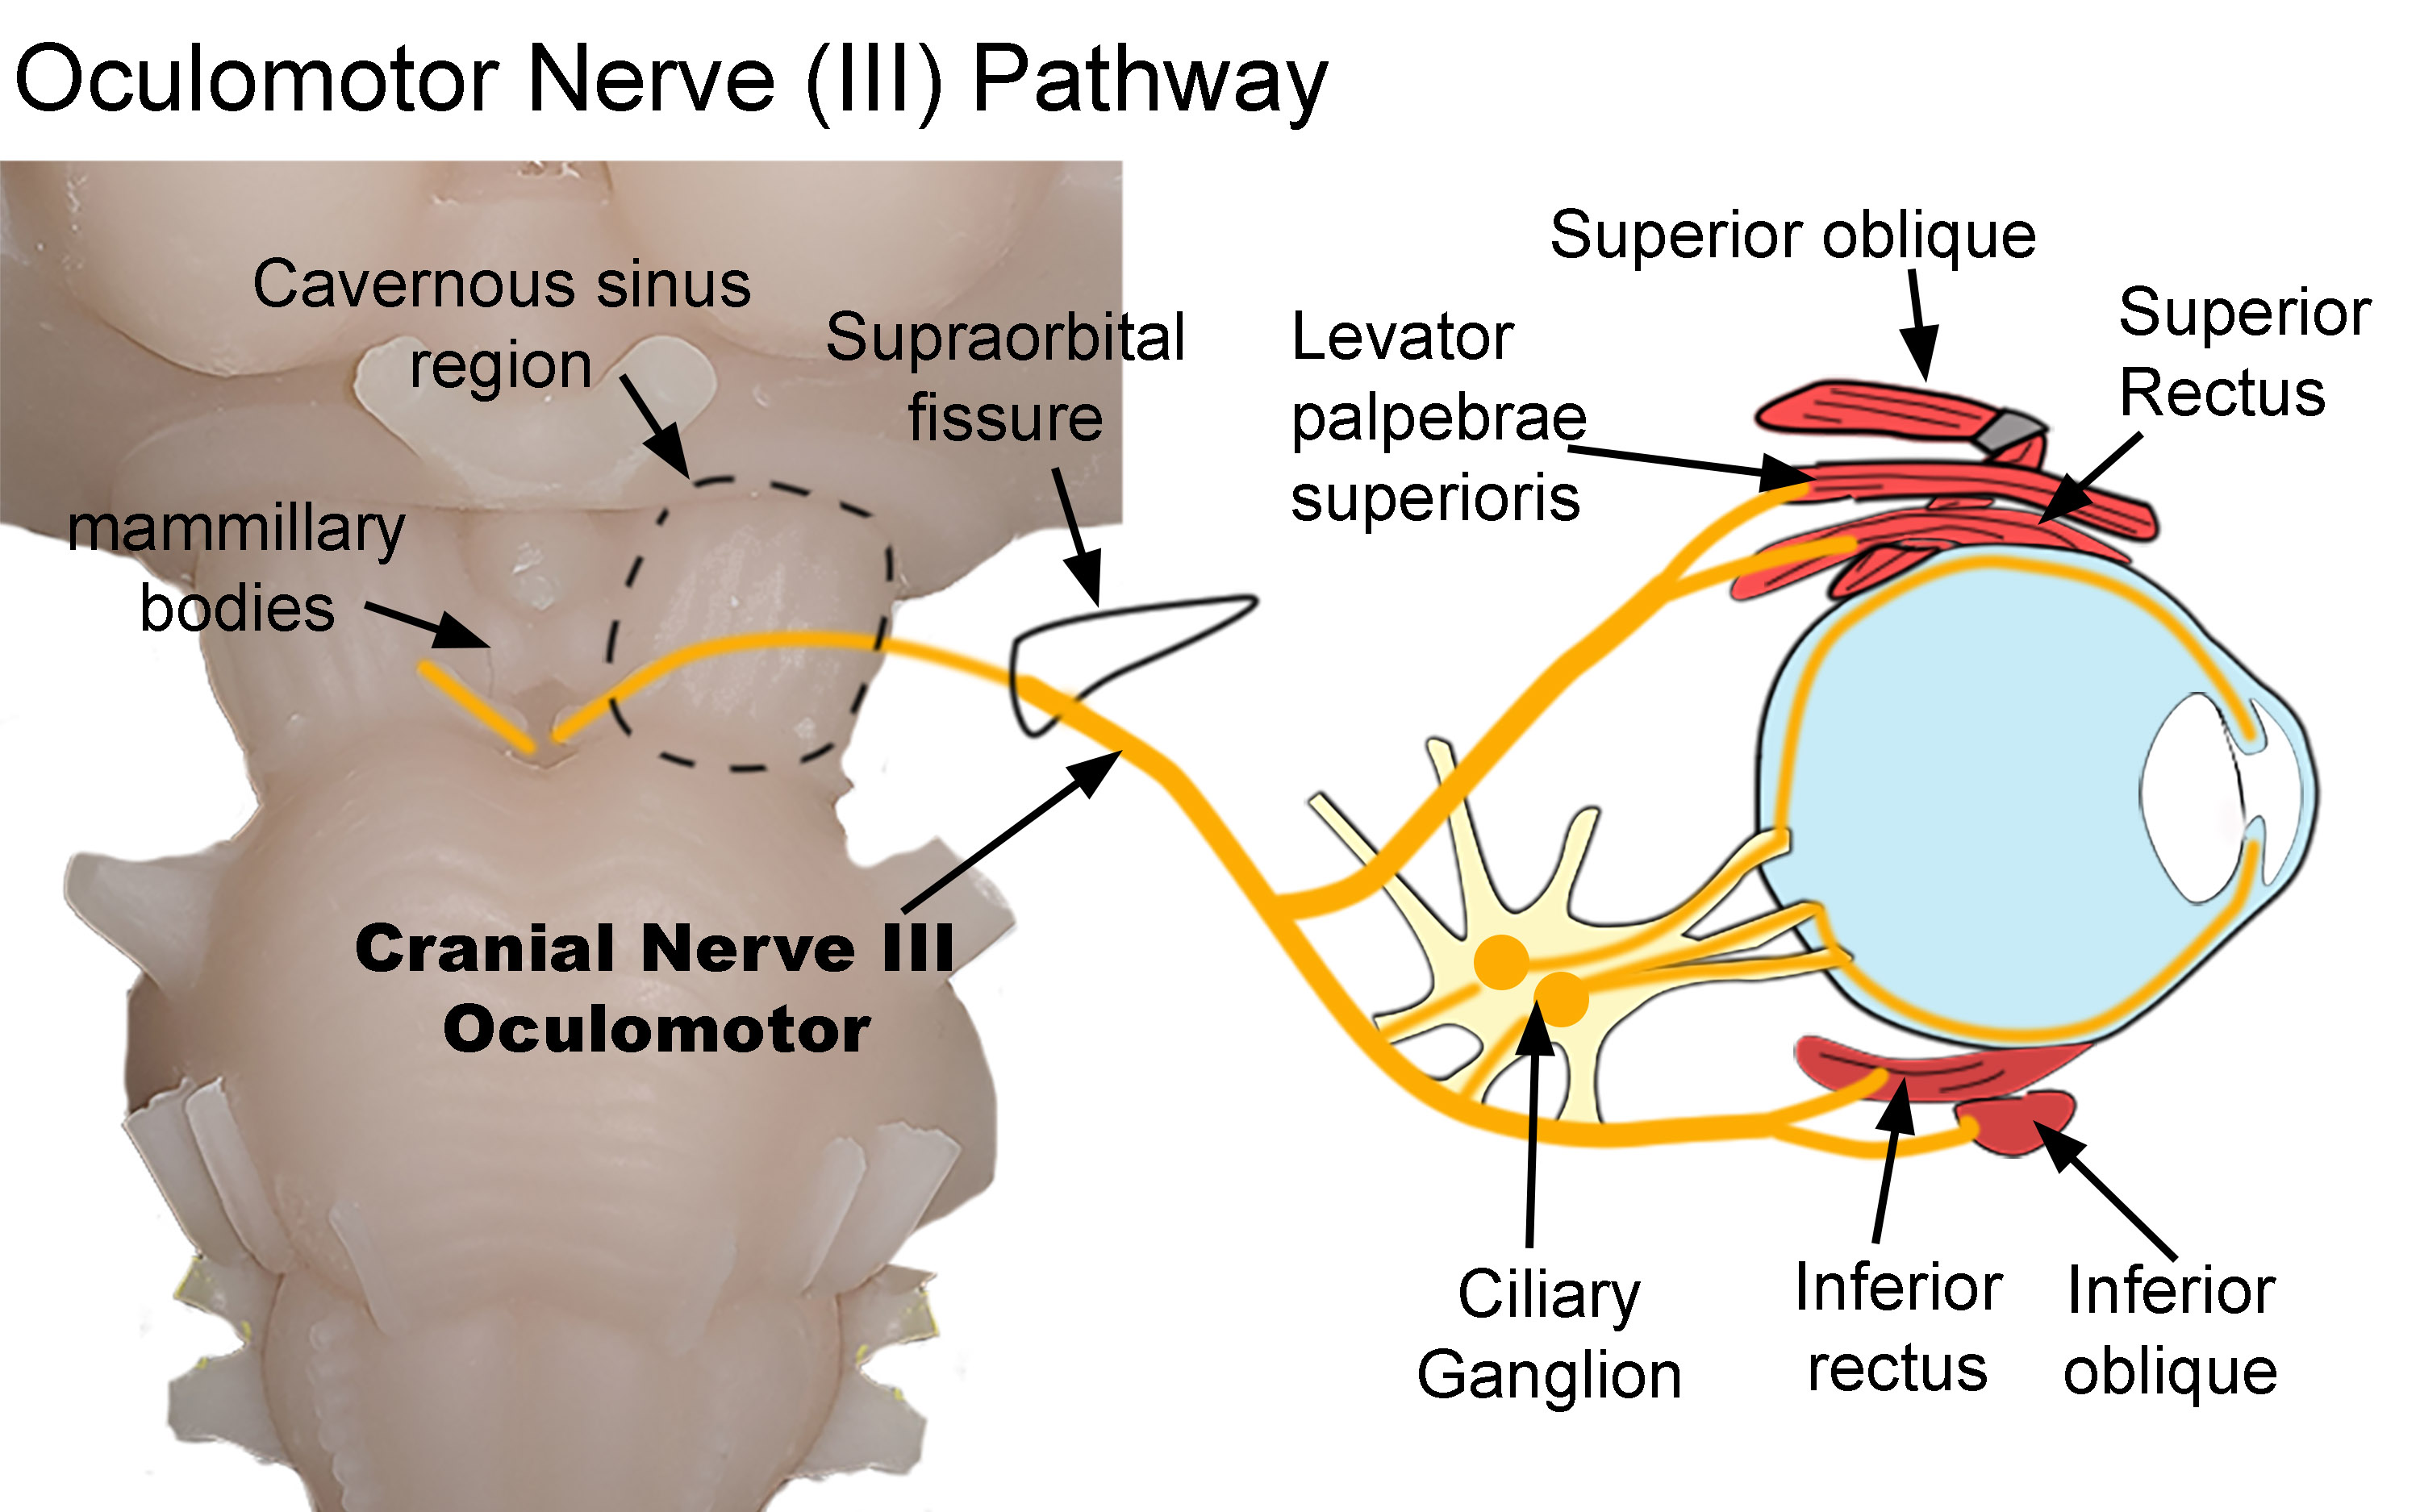 Pathway of the Oculomotor Nerve (III)